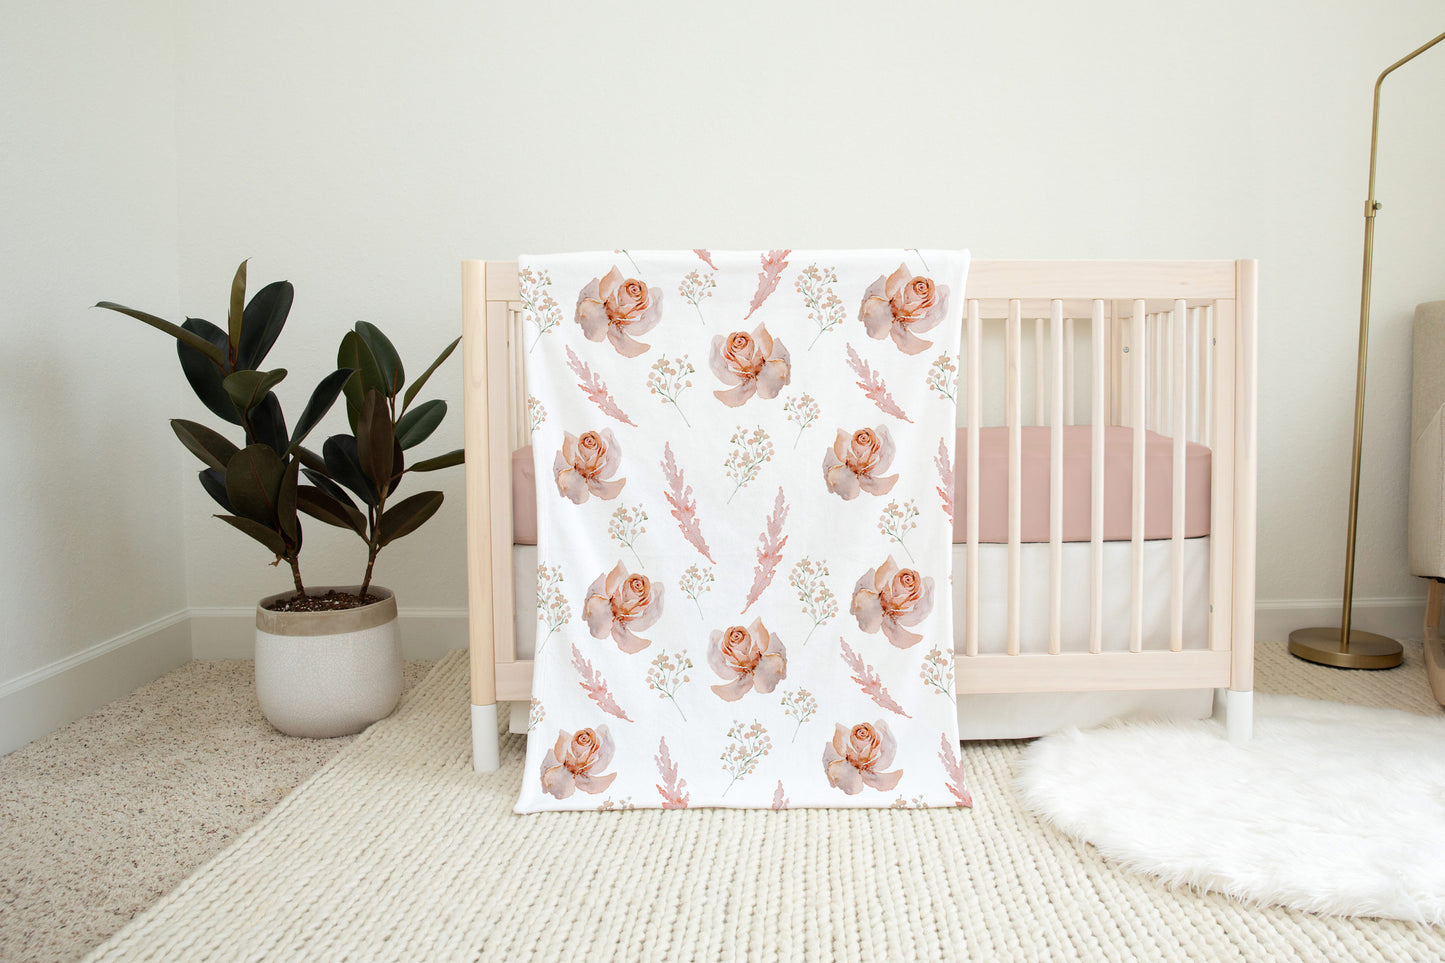 Roses Minky Blanket, Coral floral nursery bedding - Delicate Breeze